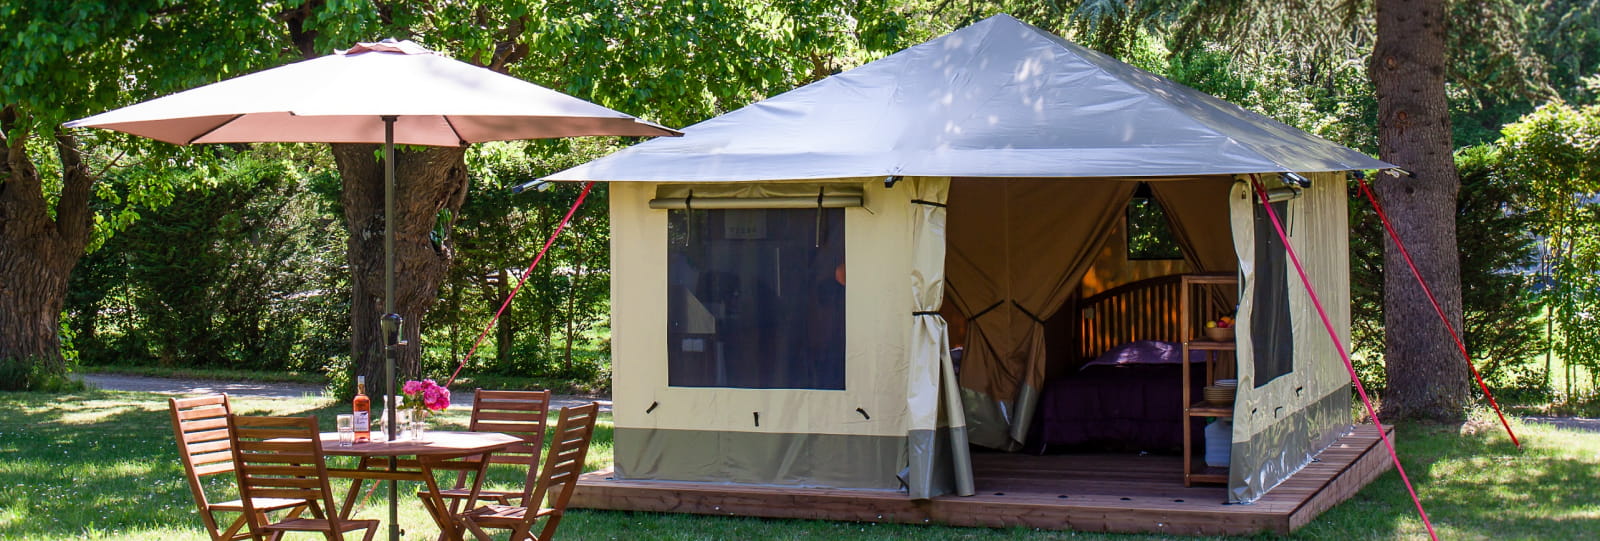 Tente Lodge 'Pitrou' - Camping de la Clairette